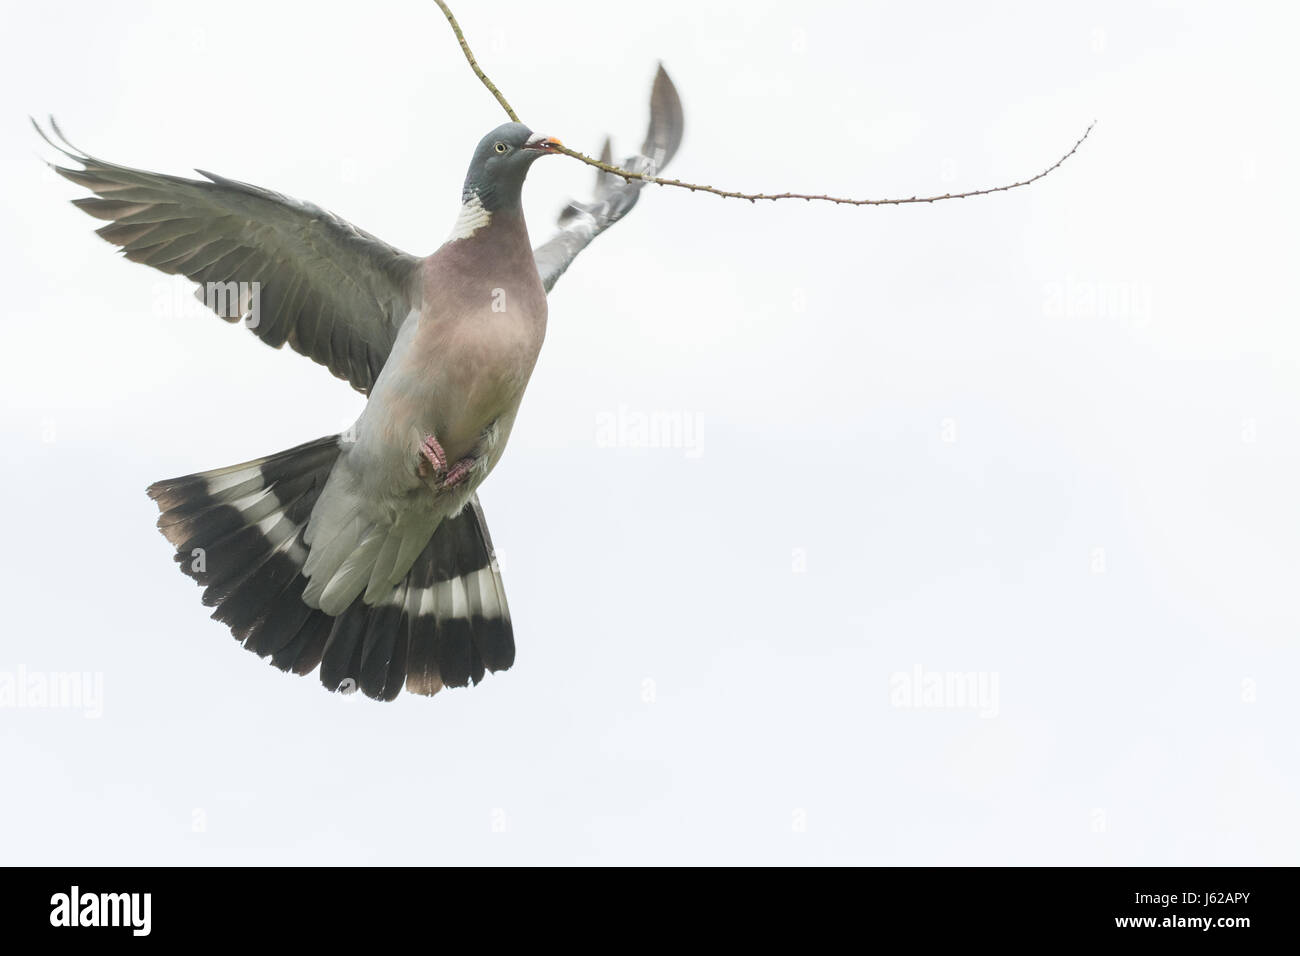 Wood pigeon flying with large stick, Scotland, UK Stock Photo